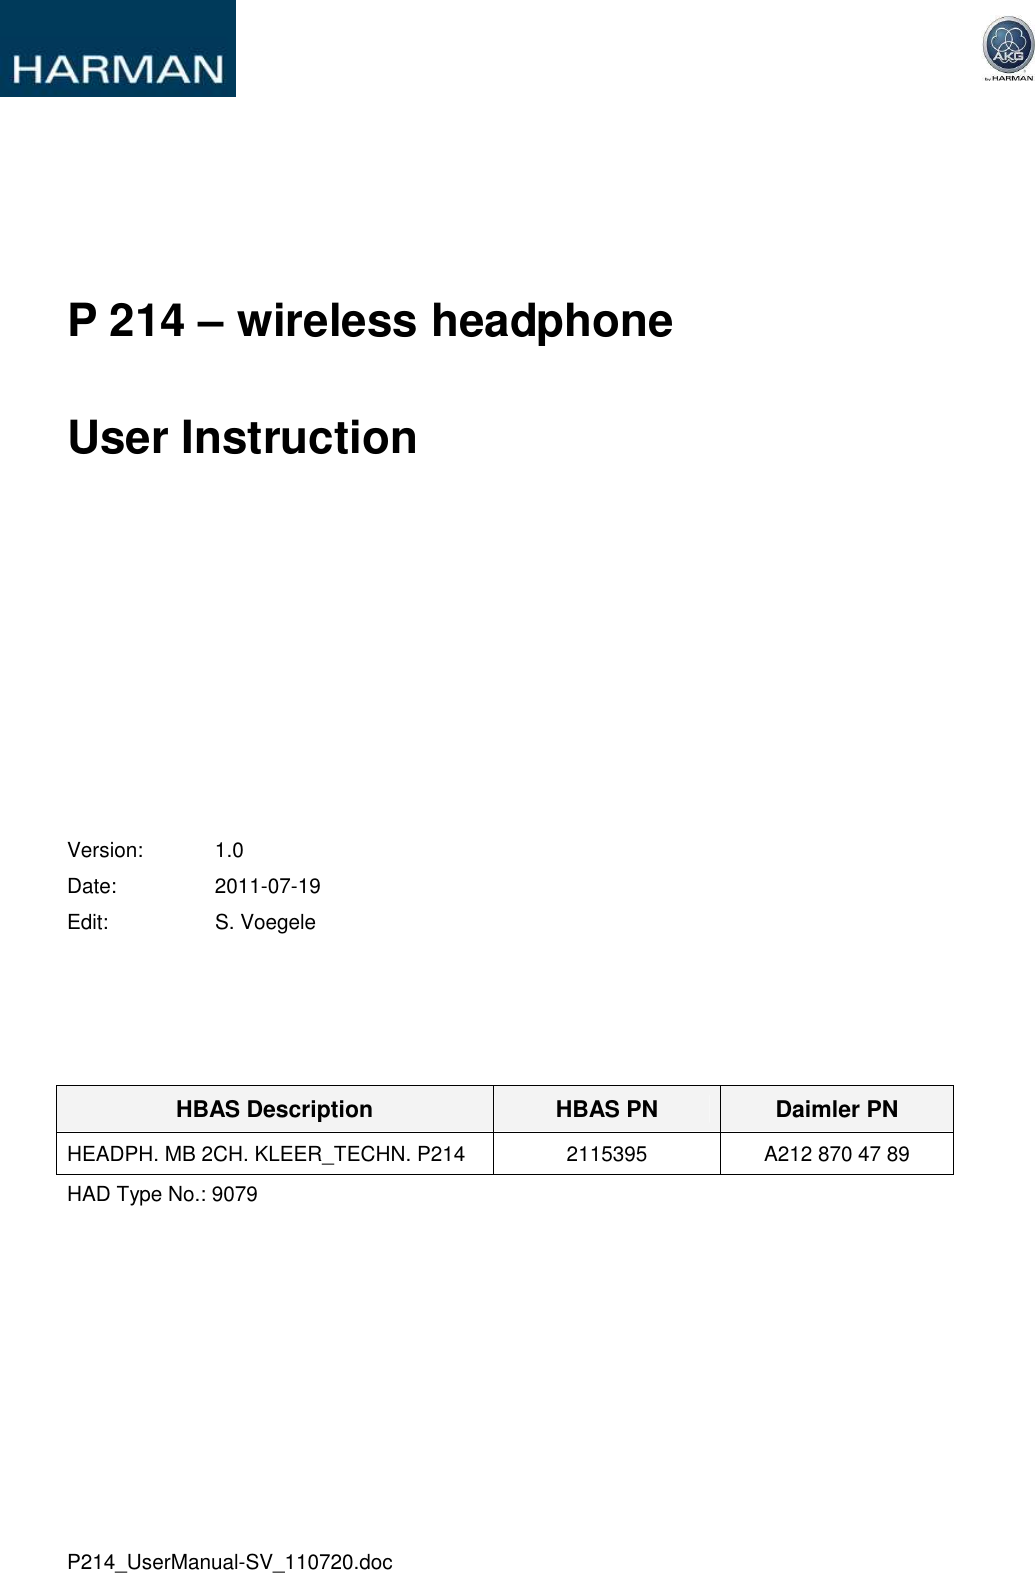     P214_UserManual-SV_110720.doc   P 214 – wireless headphone User Instruction                Version:  1.0 Date:  2011-07-19 Edit:  S. Voegele     HBAS Description  HBAS PN  Daimler PN HEADPH. MB 2CH. KLEER_TECHN. P214  2115395  A212 870 47 89 HAD Type No.: 9079  